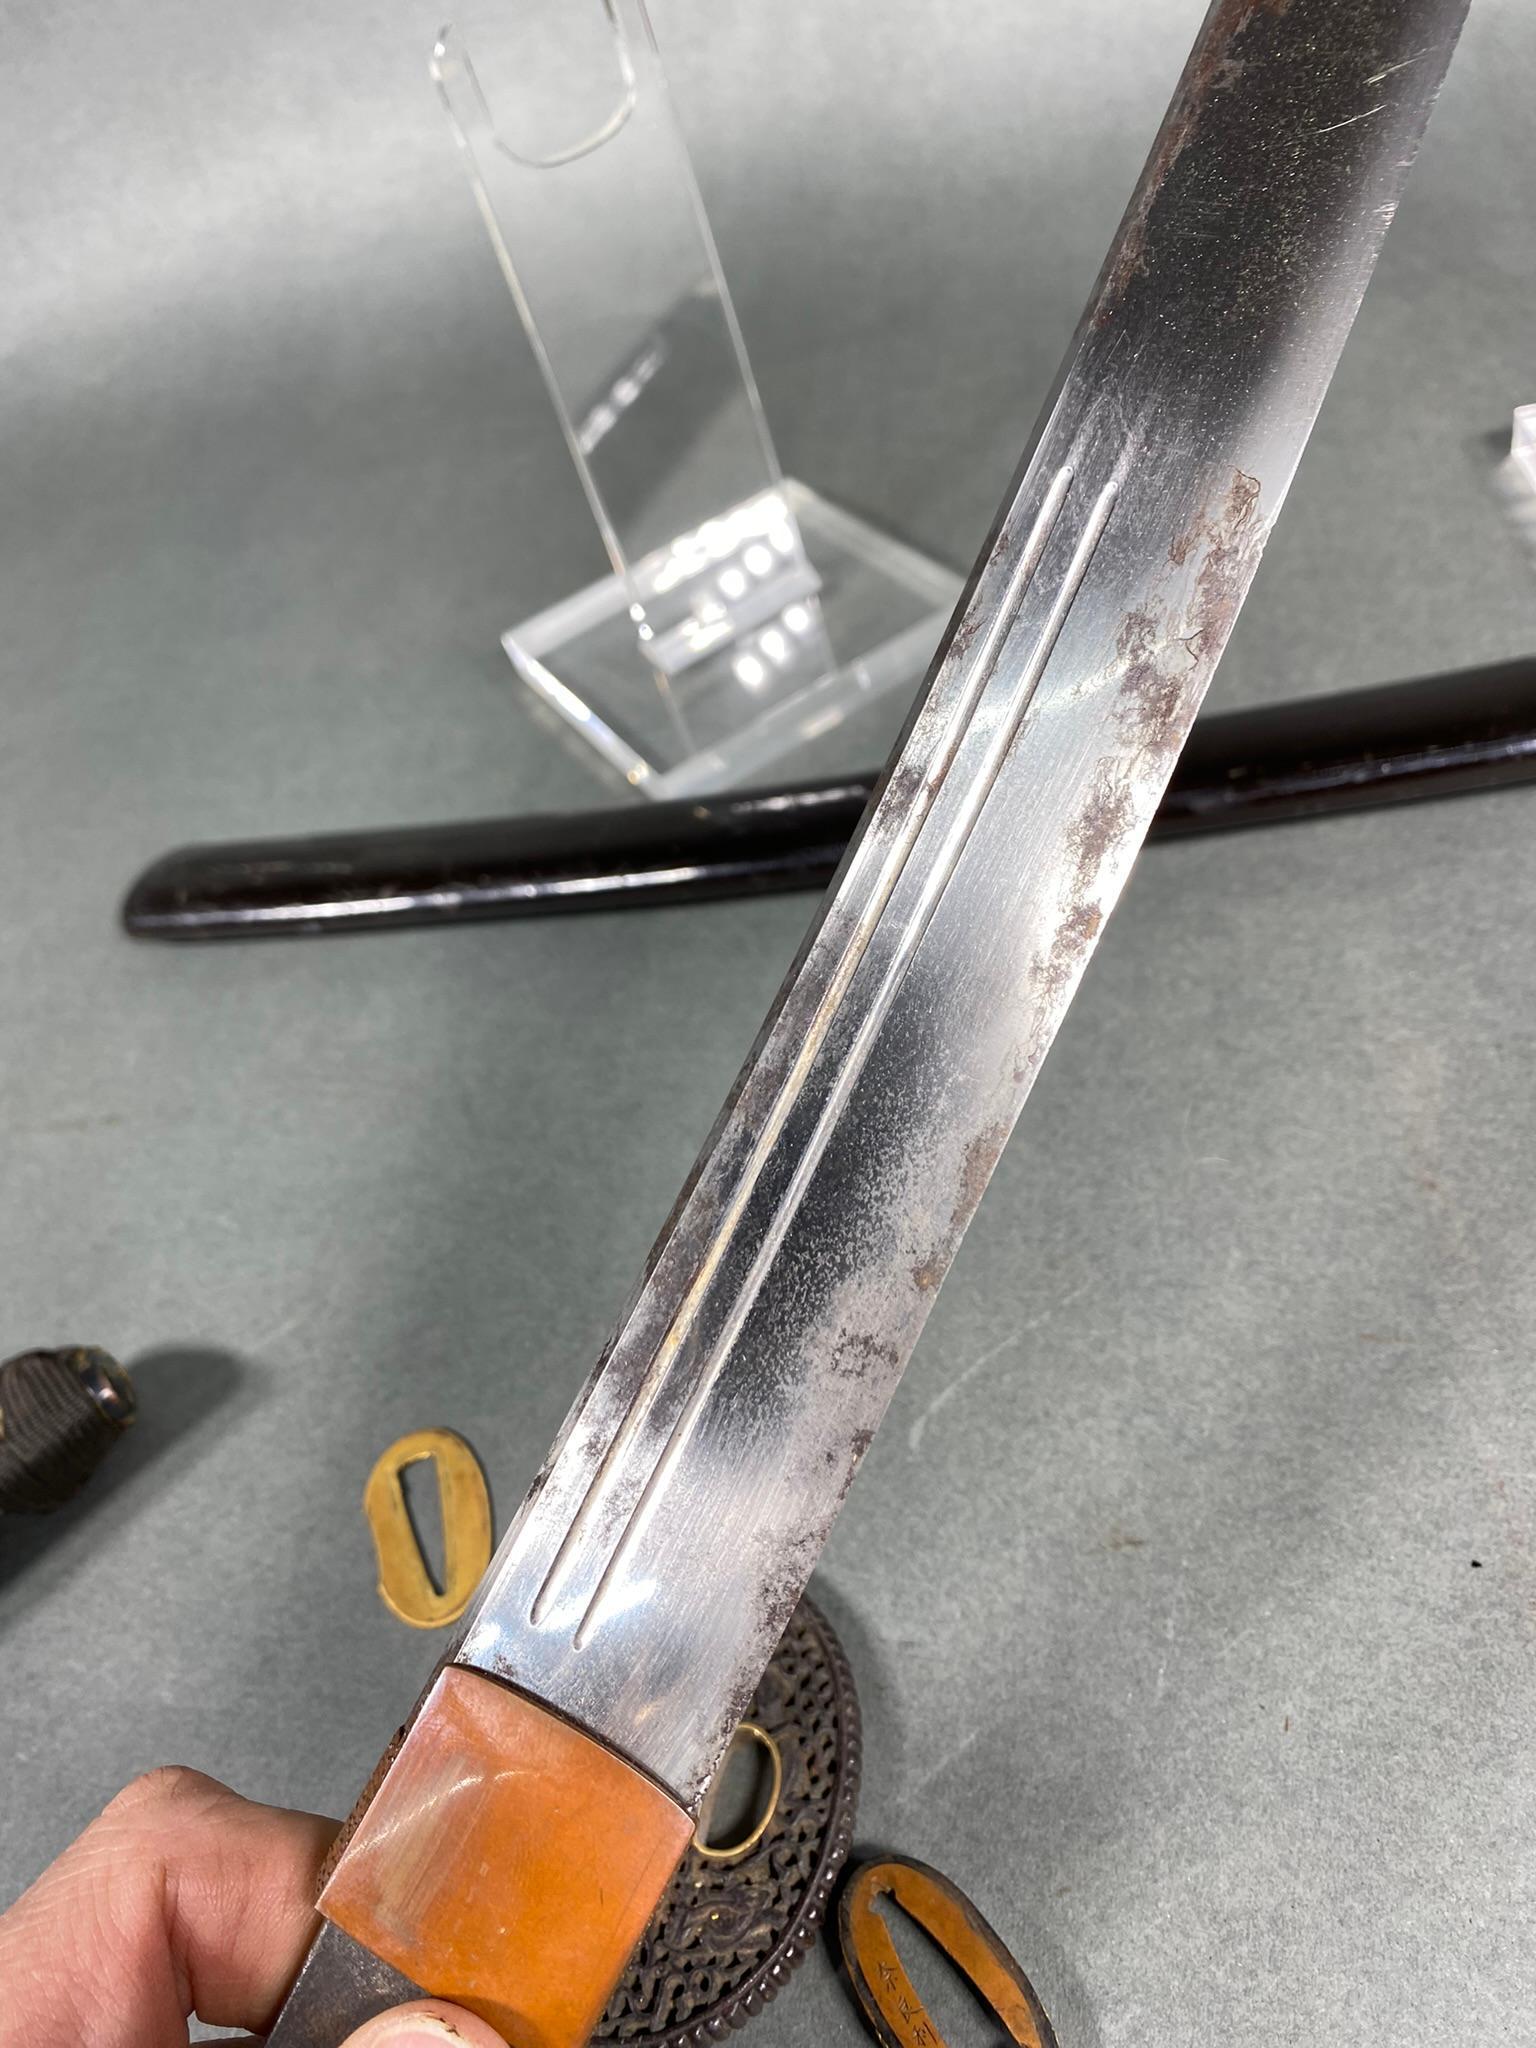 JAPANESE WAKIZASHI SAMURAI SWORD IN FITTINGS